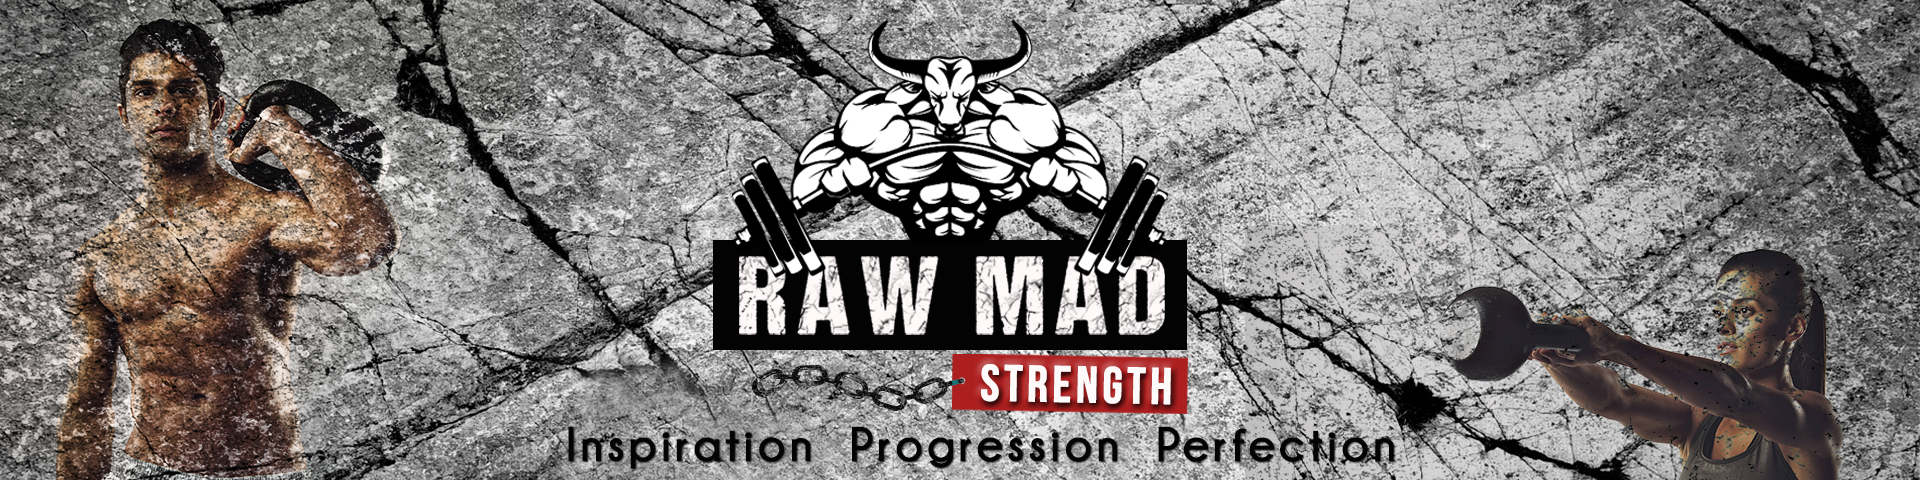 Raw Mad Strength